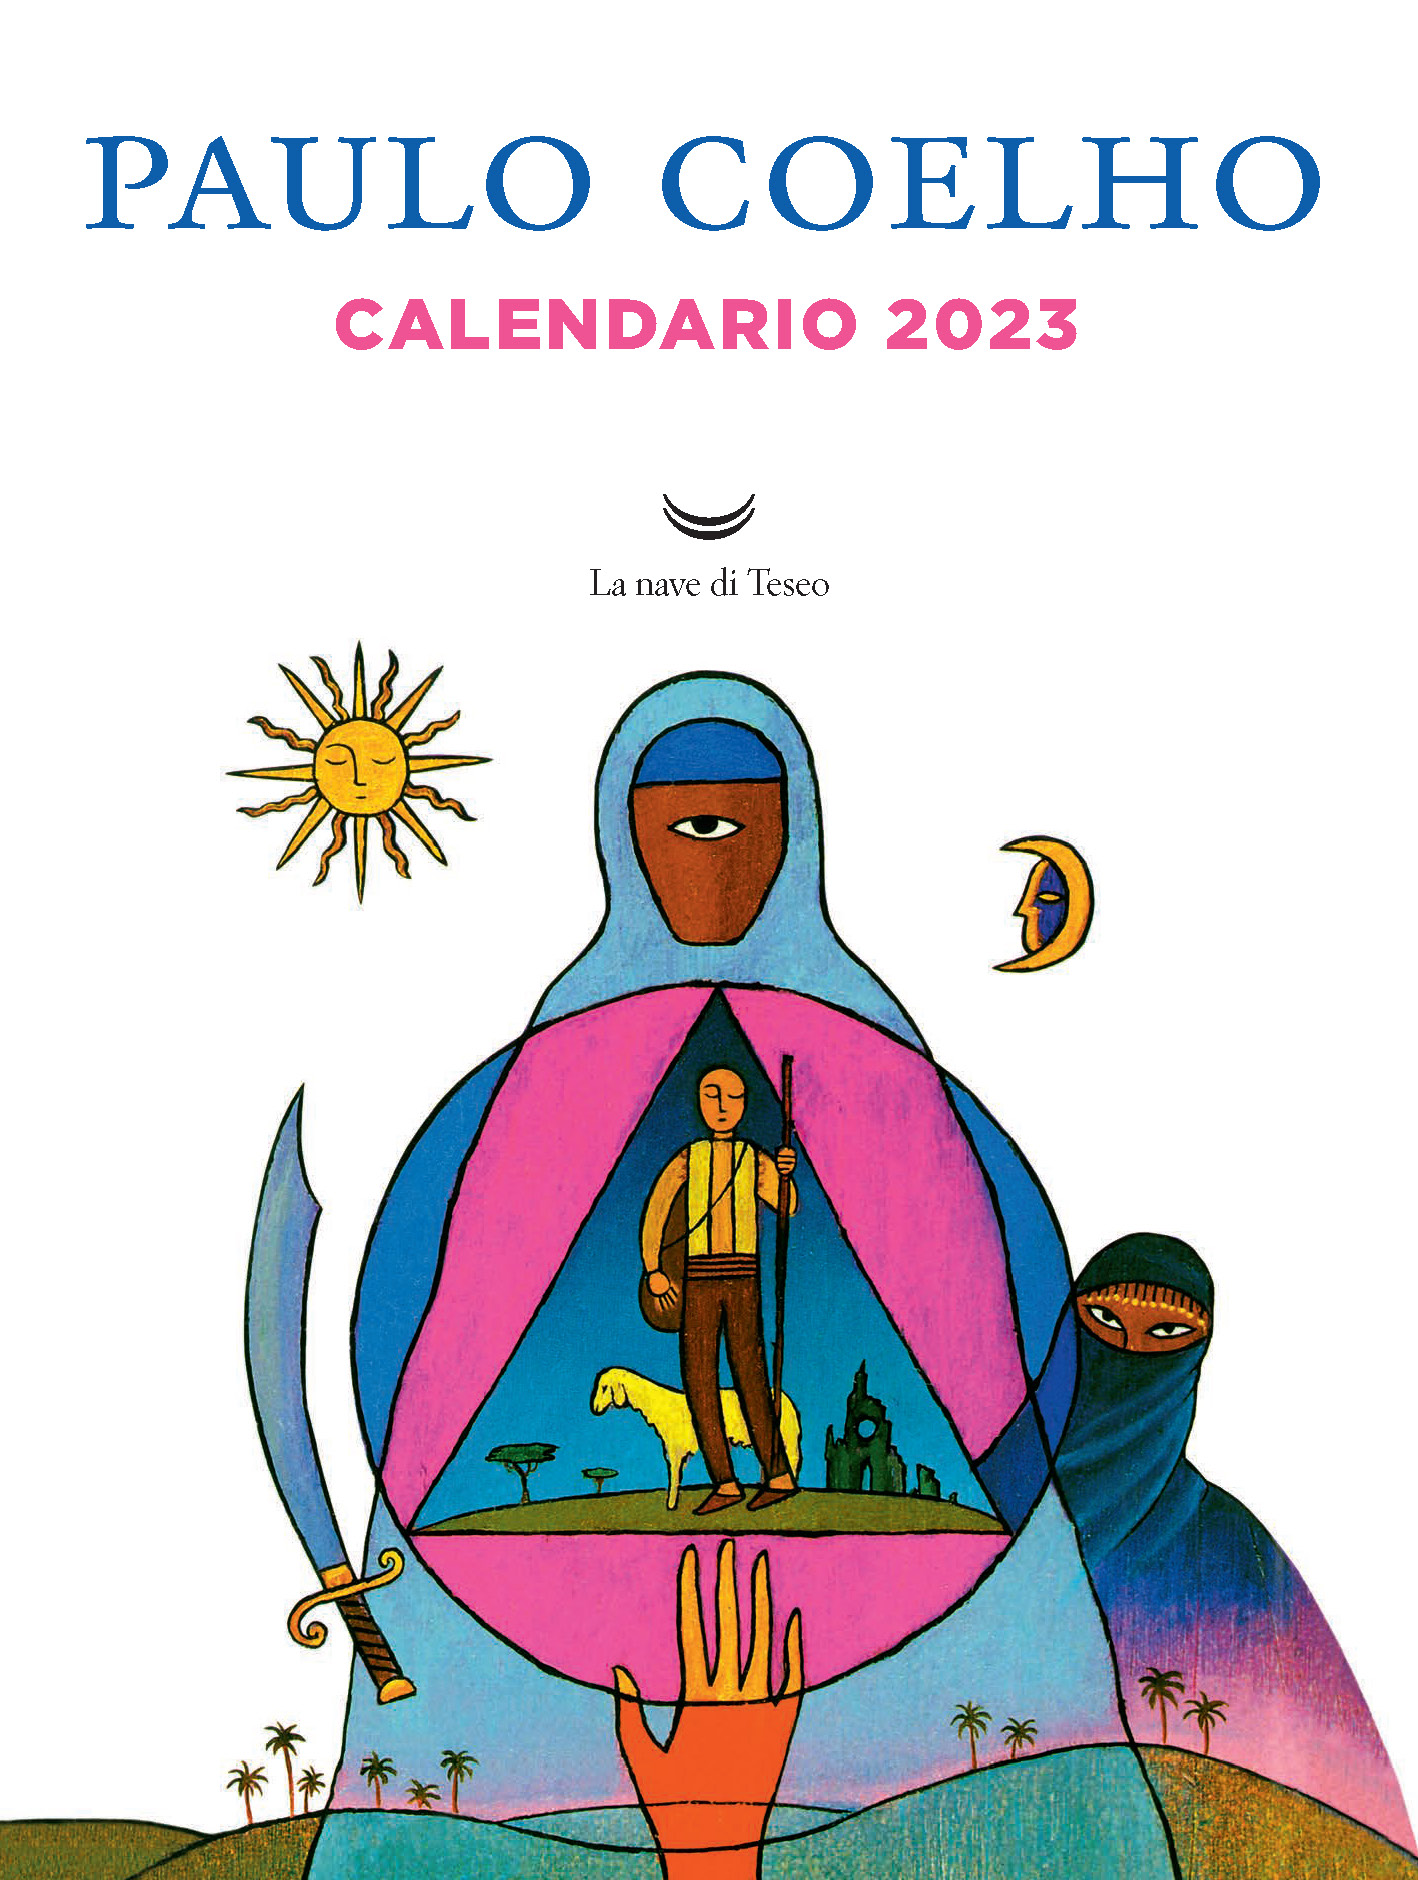 Coleho_Calendario 2023